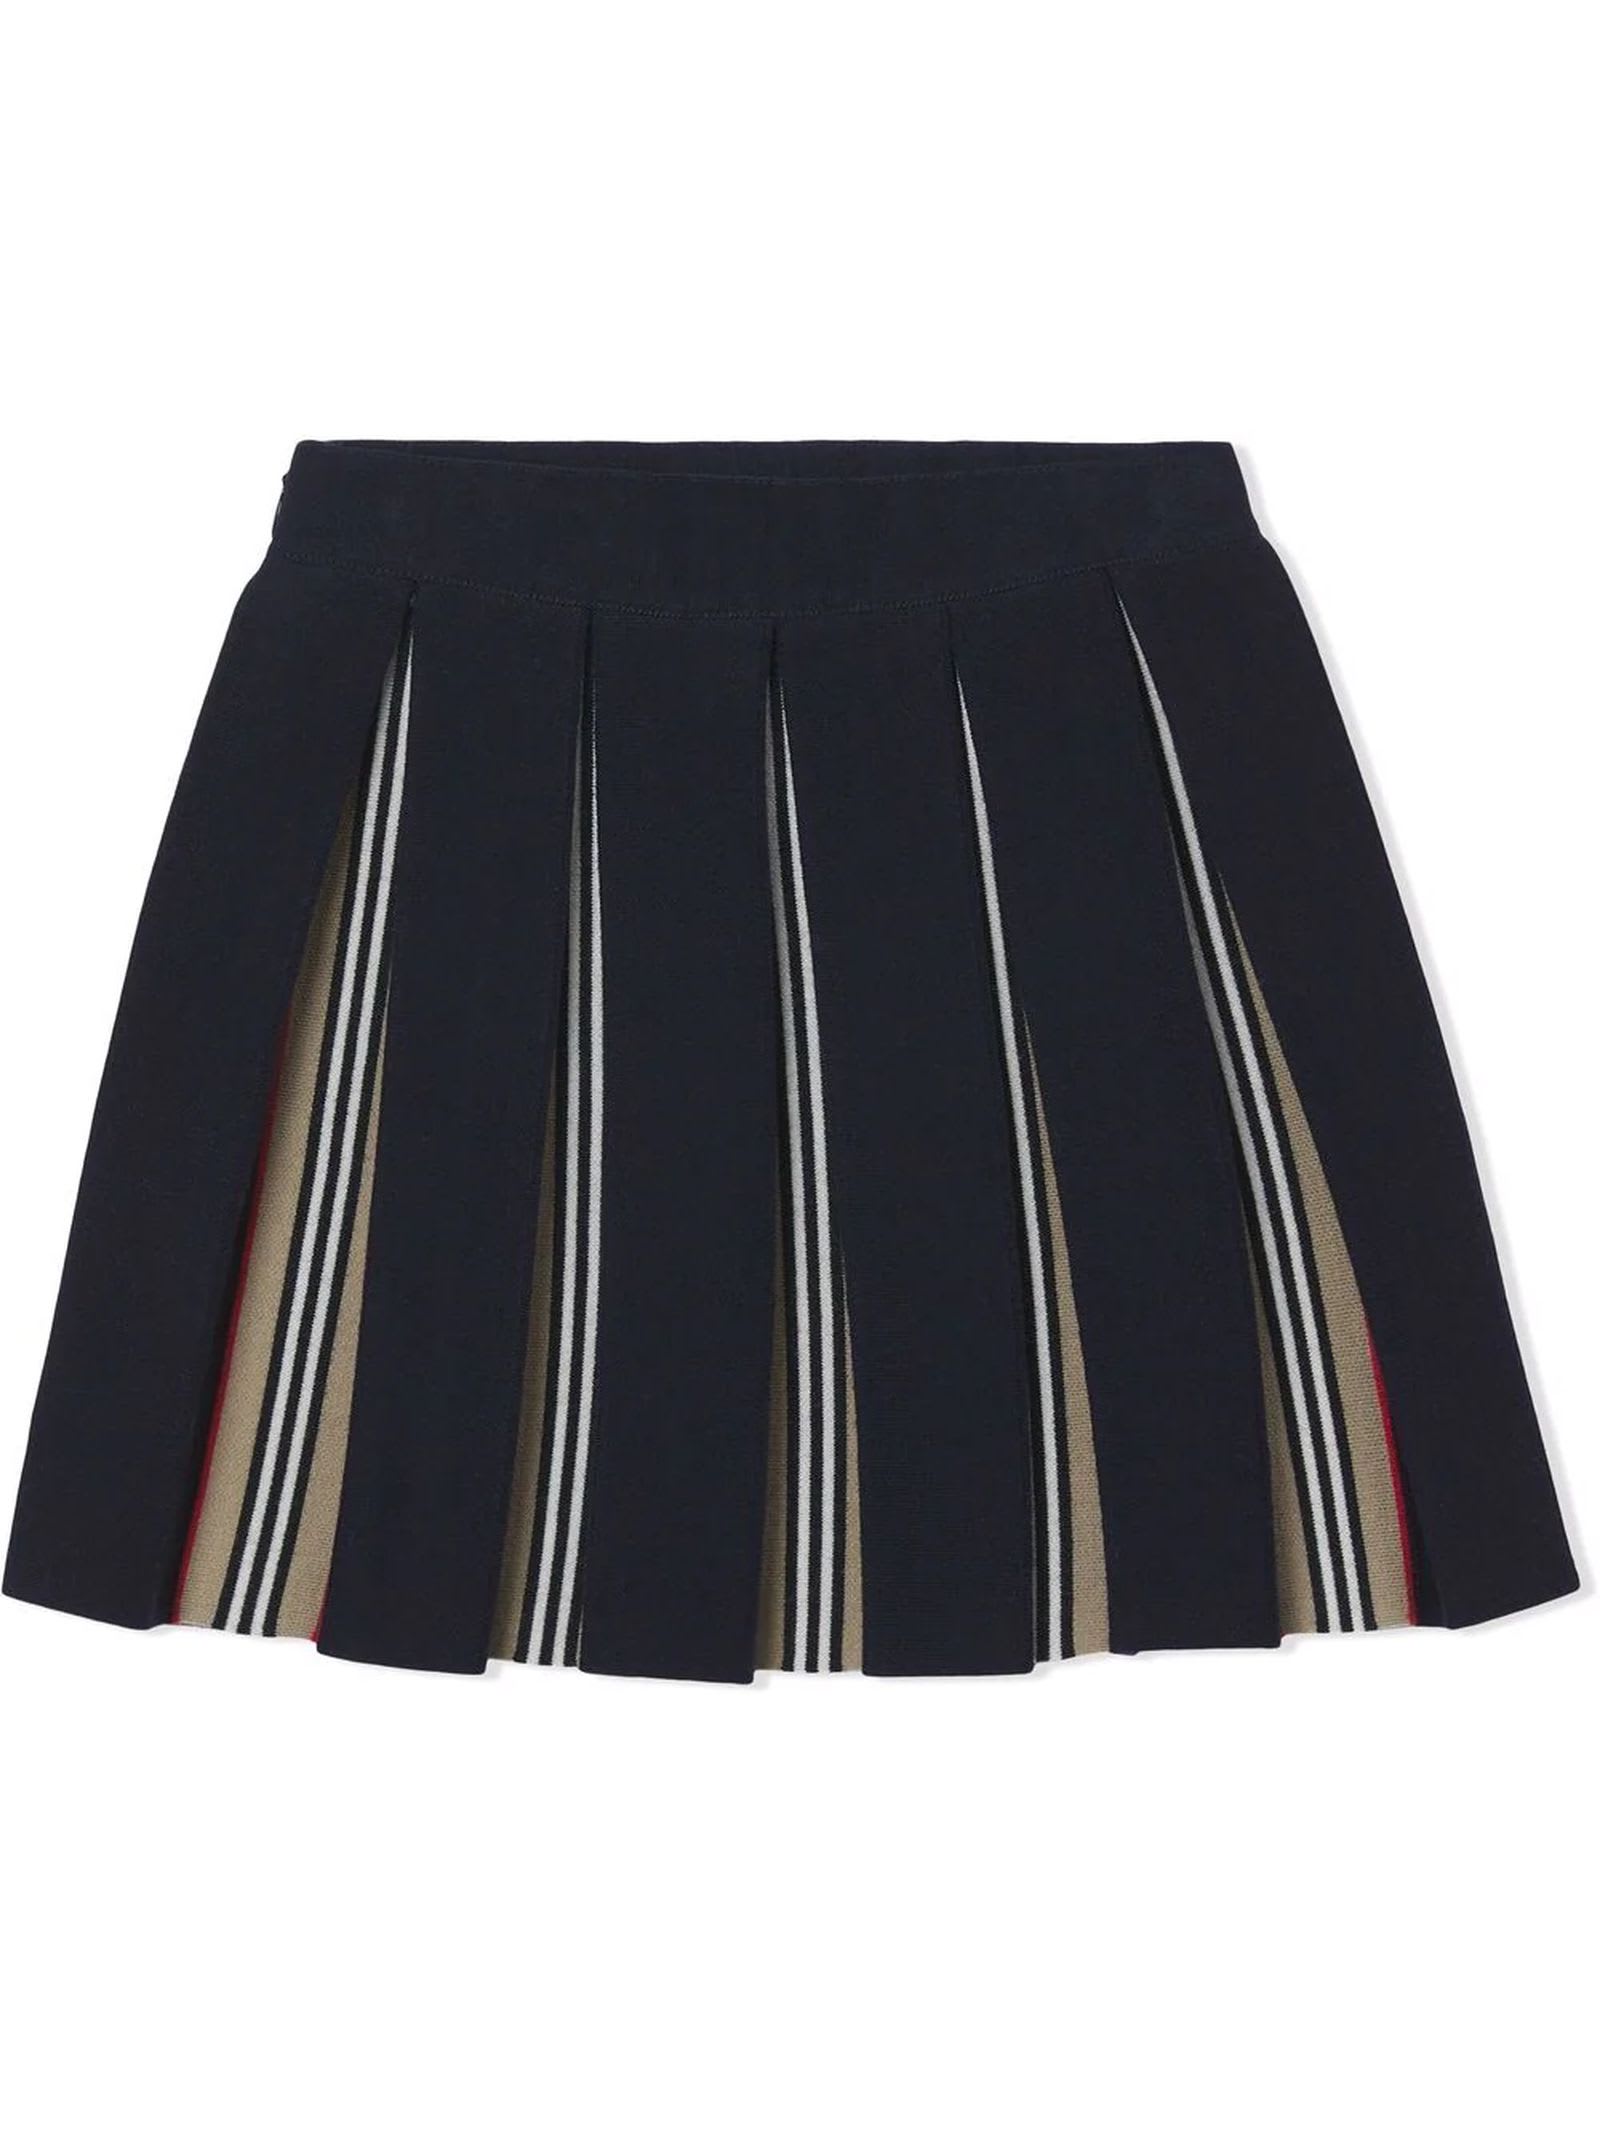 Burberry Black Wool A-line Skirt